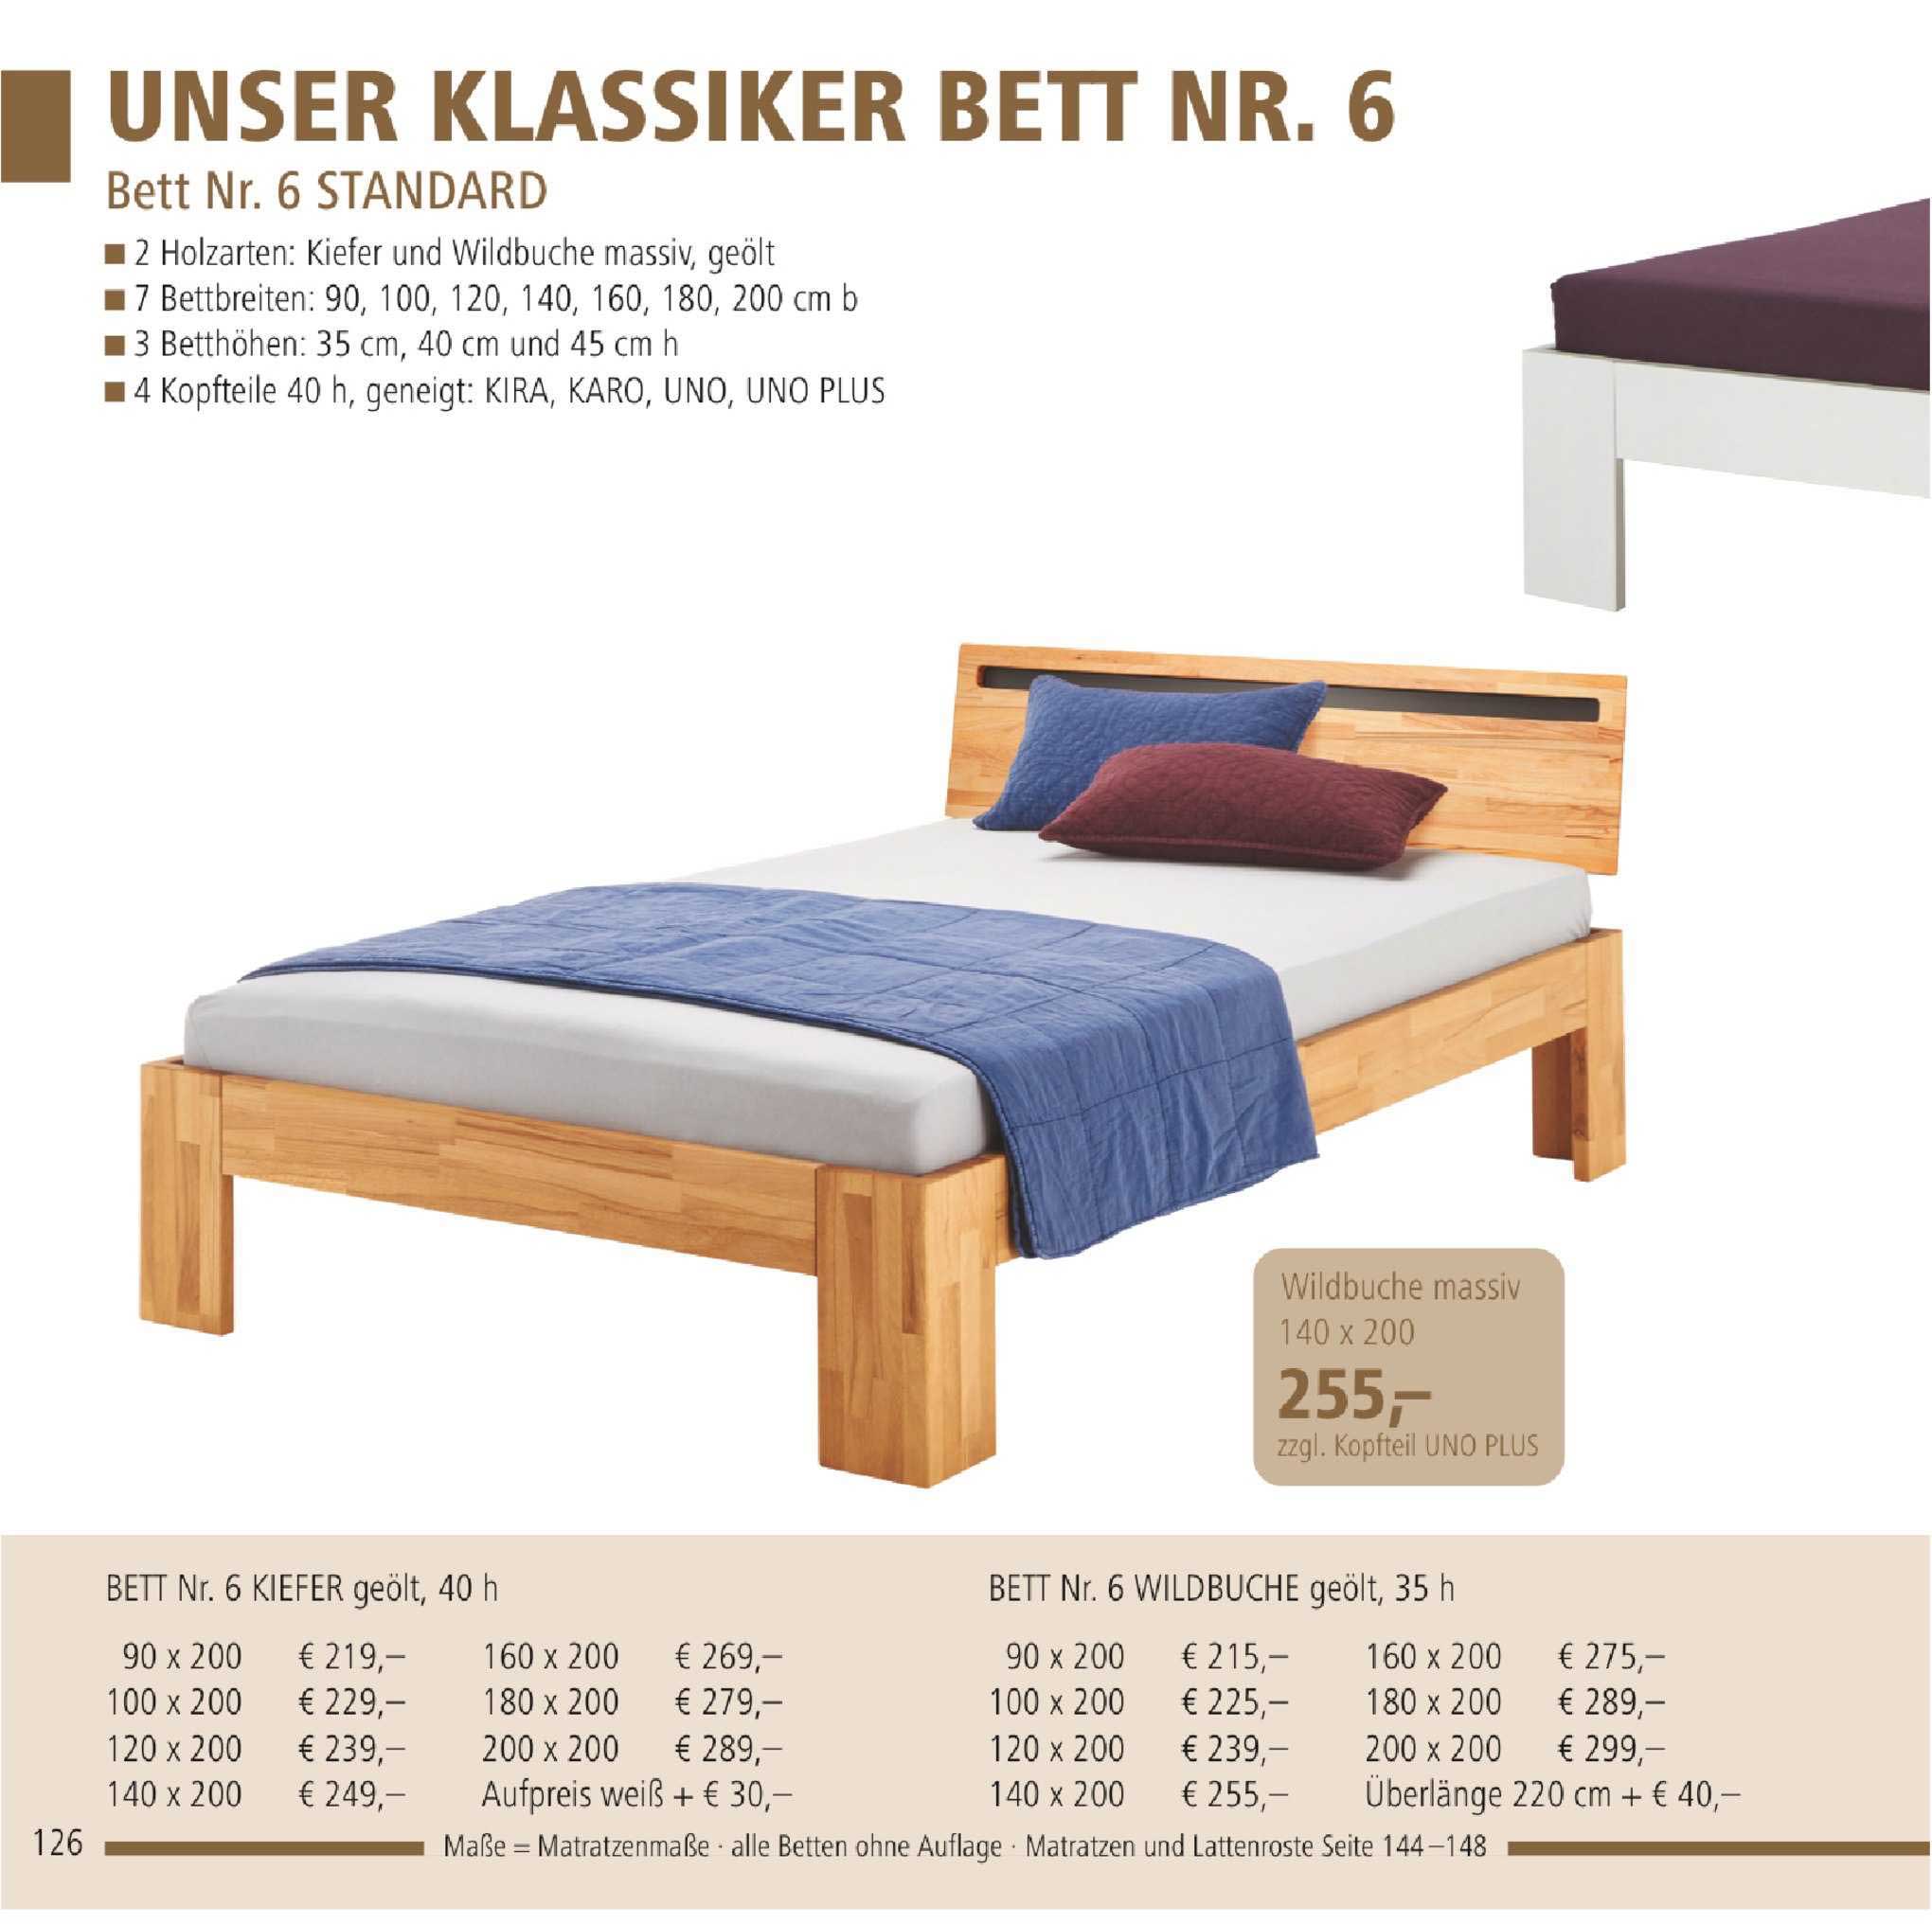 Unser Klassiker Bett Nr. 6 Angebot bei Möbelum - 1Prospekte.de